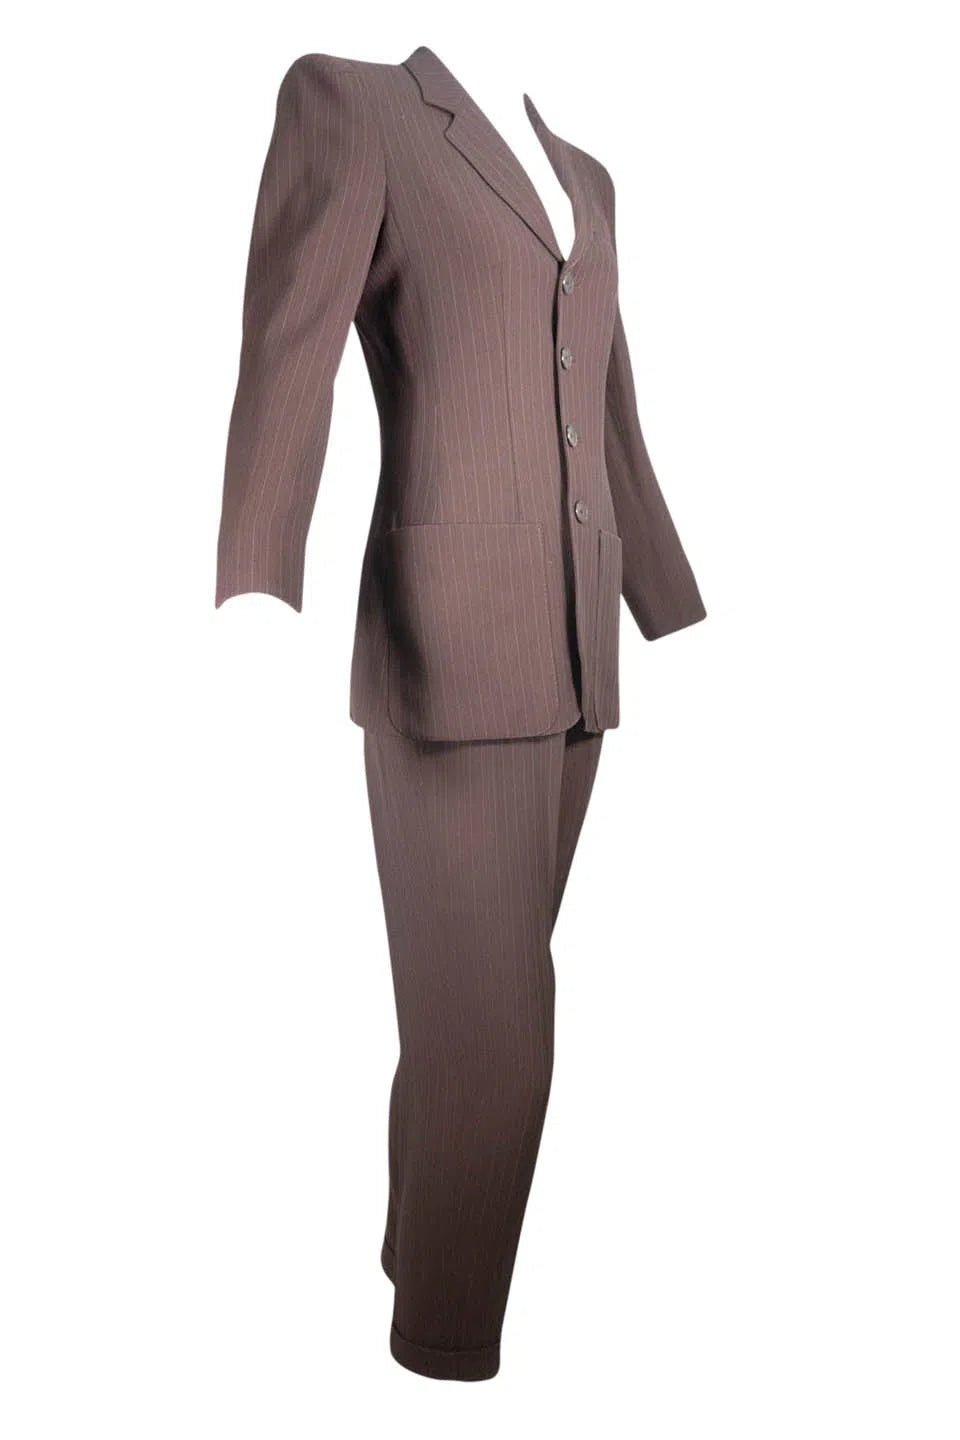 Jean Paul Gaultier Brown Pinstripe Jacket and Pants Suit Size 6